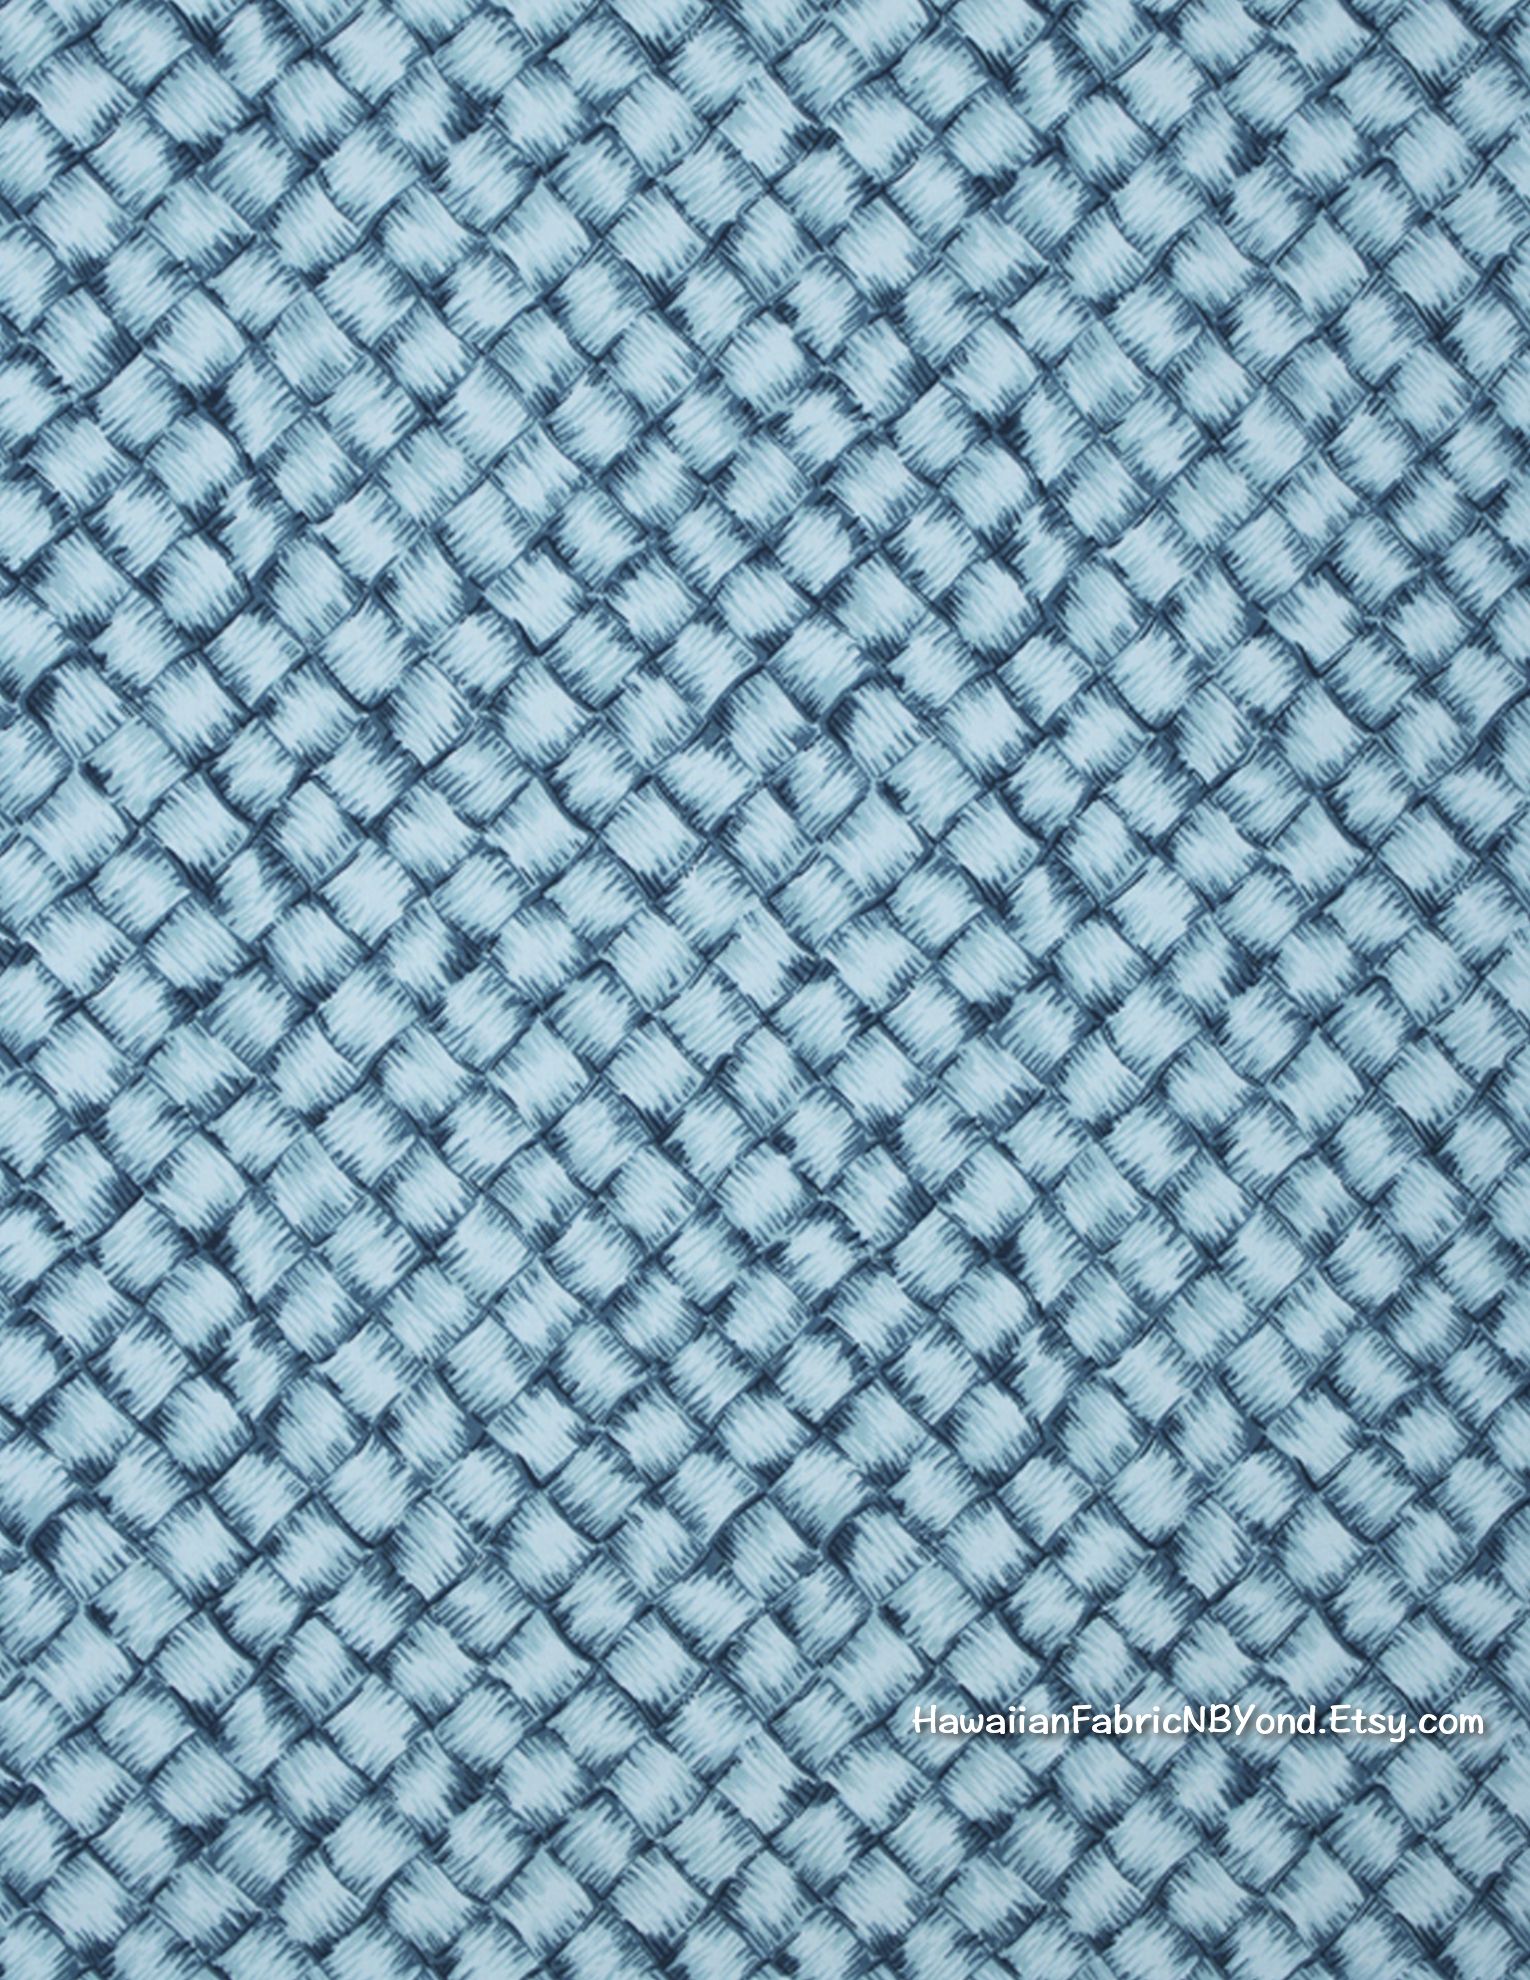 Fabric Lauhala Basket Weave Print By Hawaiianfabricnbyond